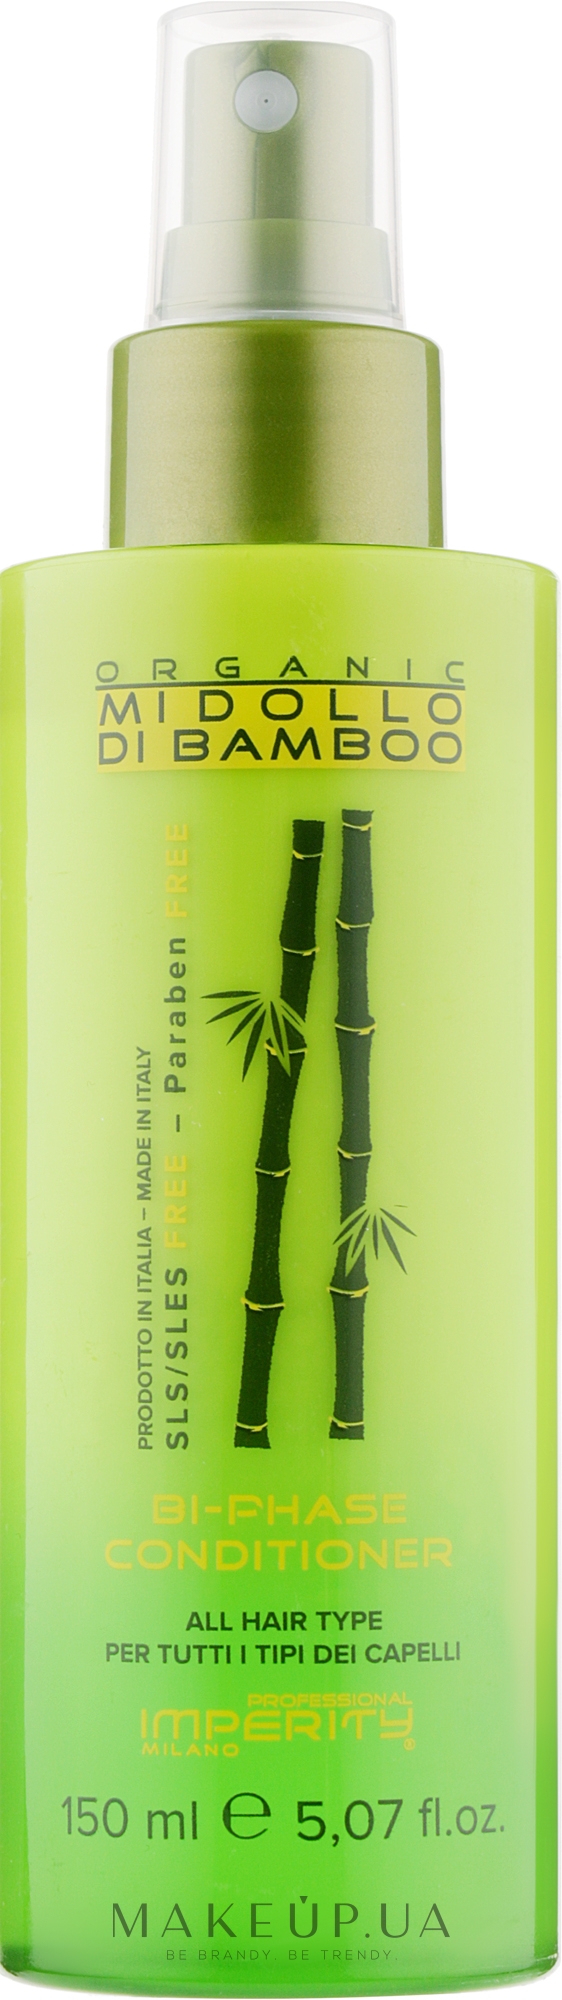 Двухфазный кондиционер-спрей для волос - Imperity Organic Midollo di Bamboo Bi-Phase Conditioner — фото 150ml